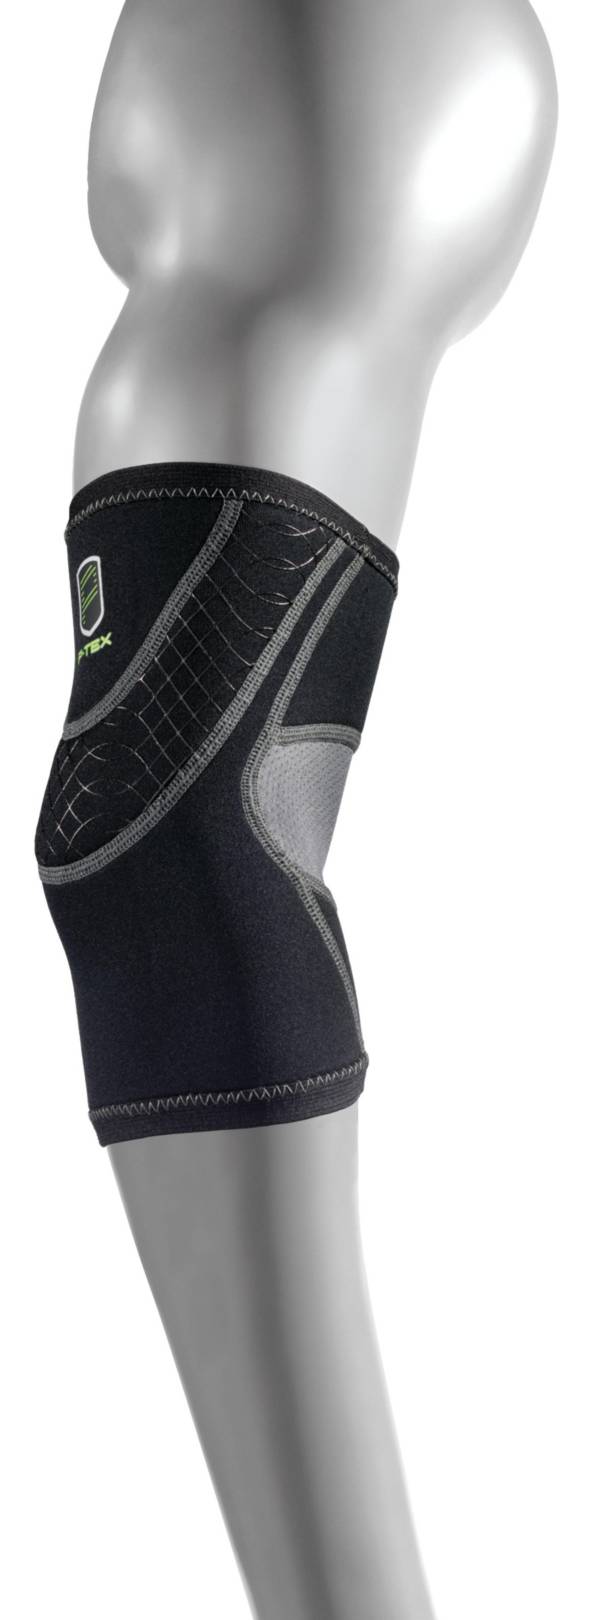 P-TEX Pro Elbow Sleeve product image